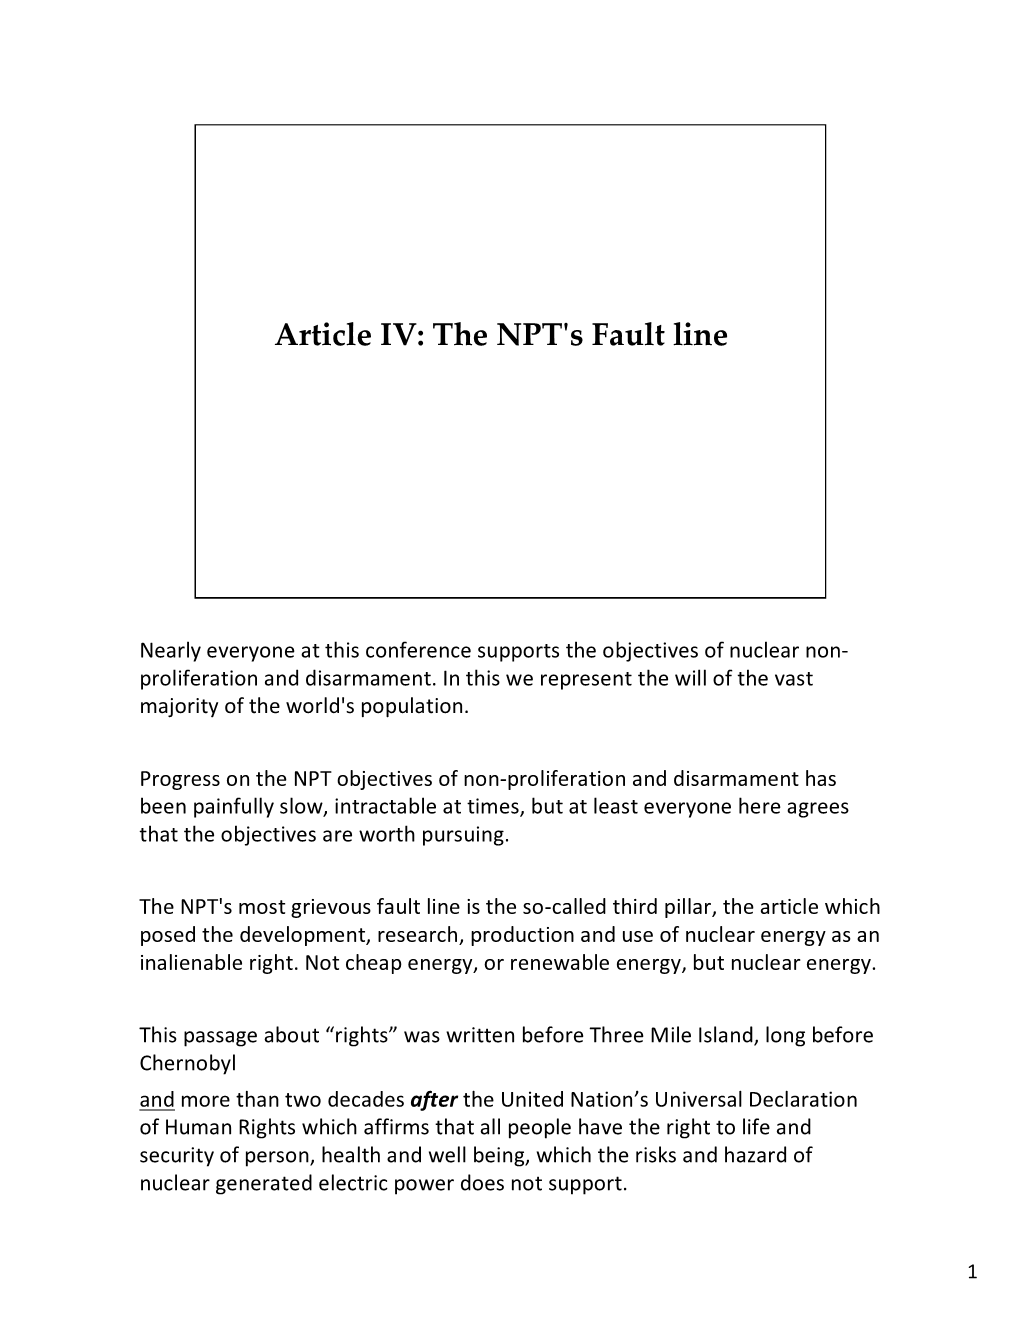 Article IV: the NPT's Fault Line